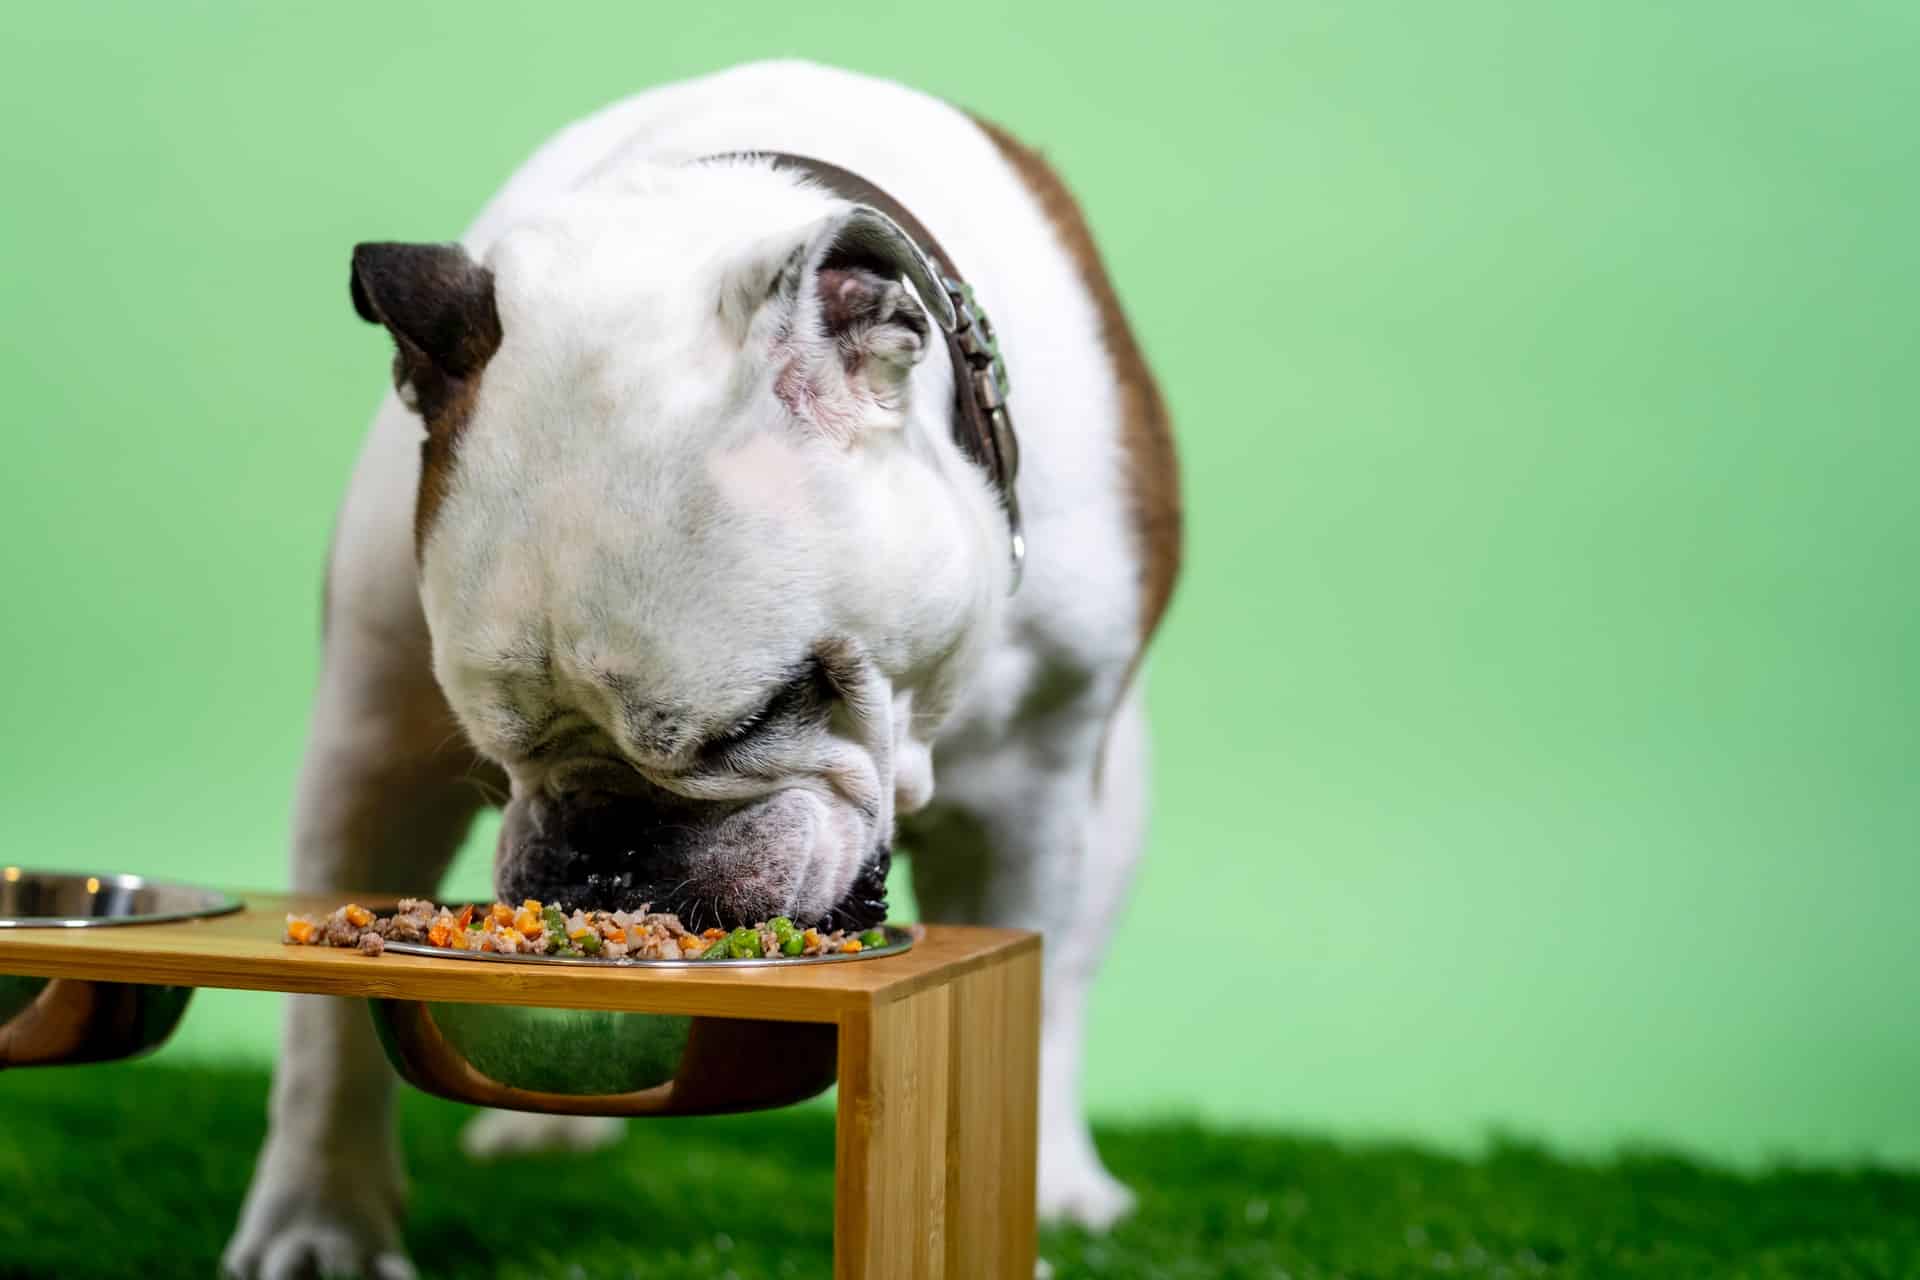 A bulldog eating from a bowl